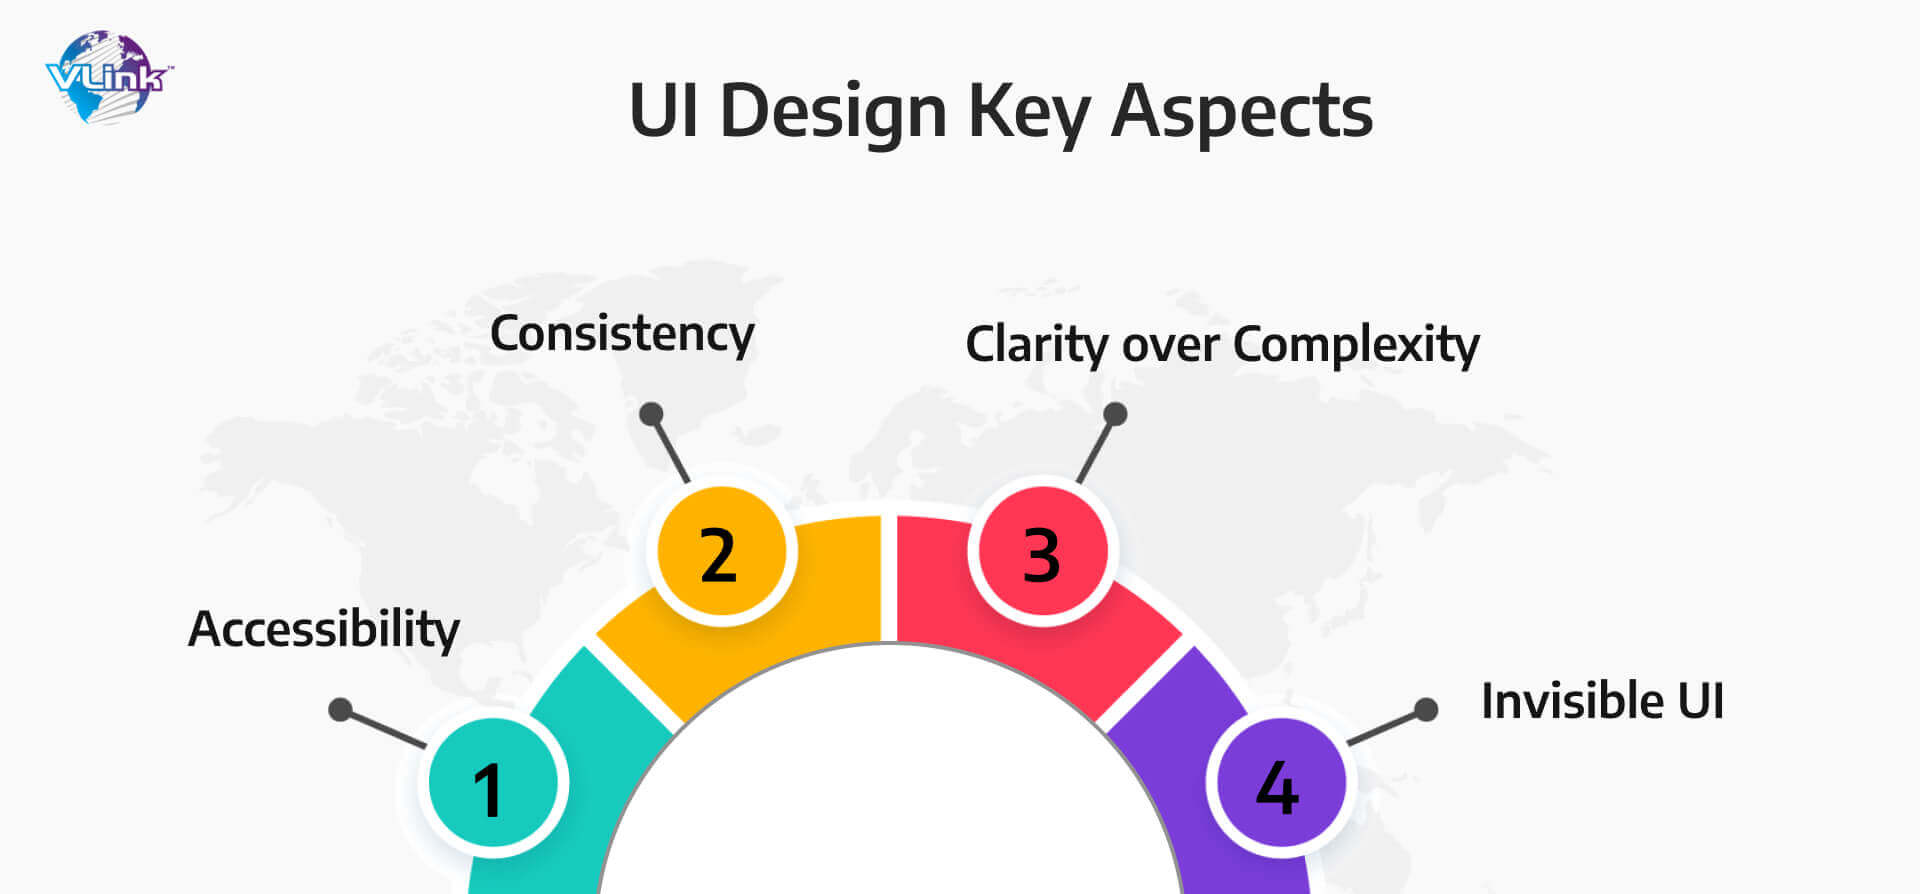 Key Elements of UI Design